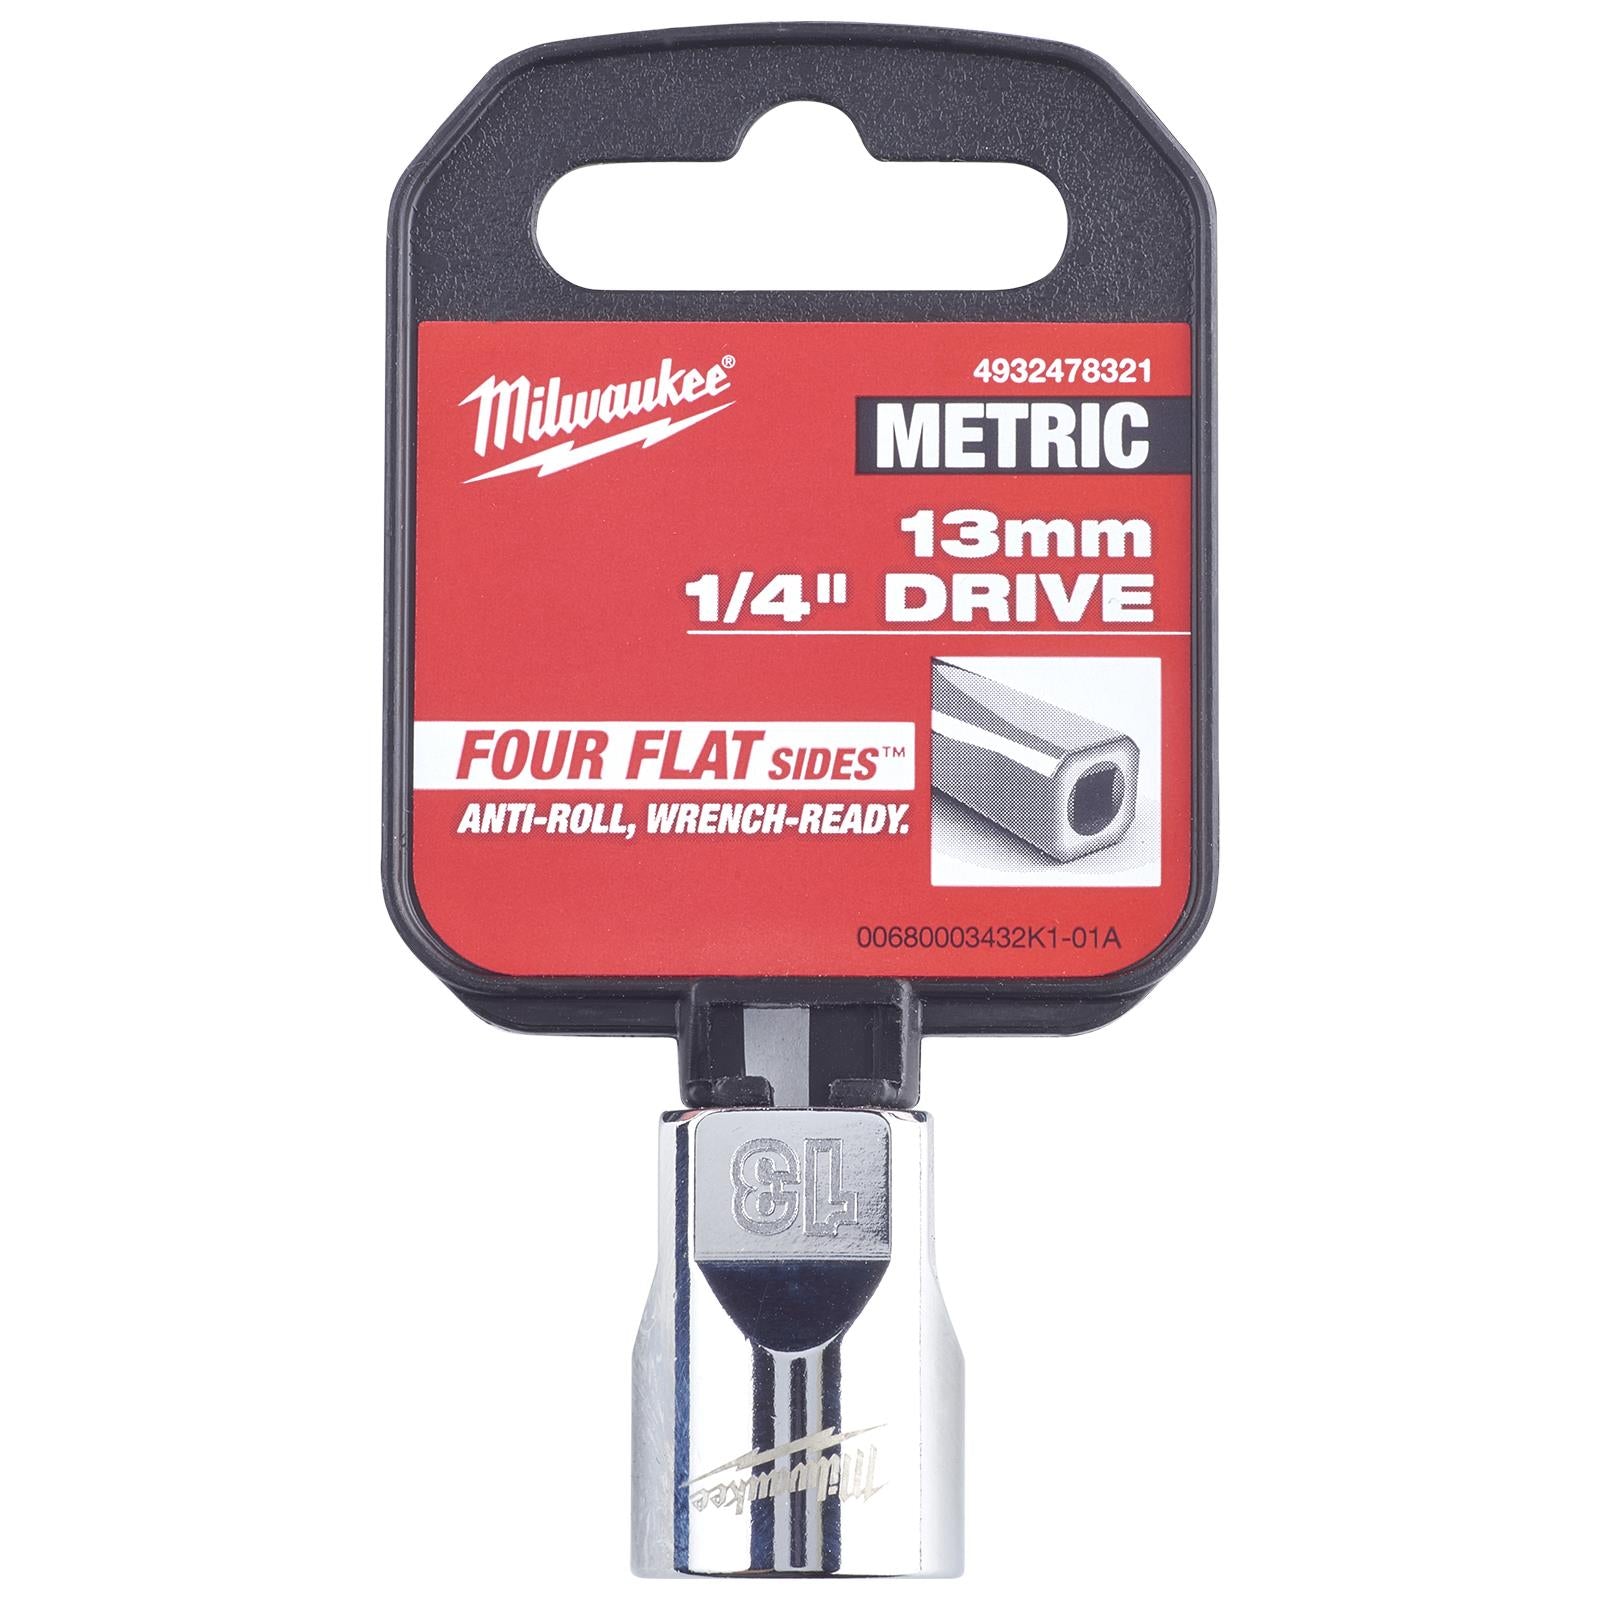 Milwaukee Chrome Socket 1/4" Drive Four Flat Sides Metric Standard 4-15mm Individual